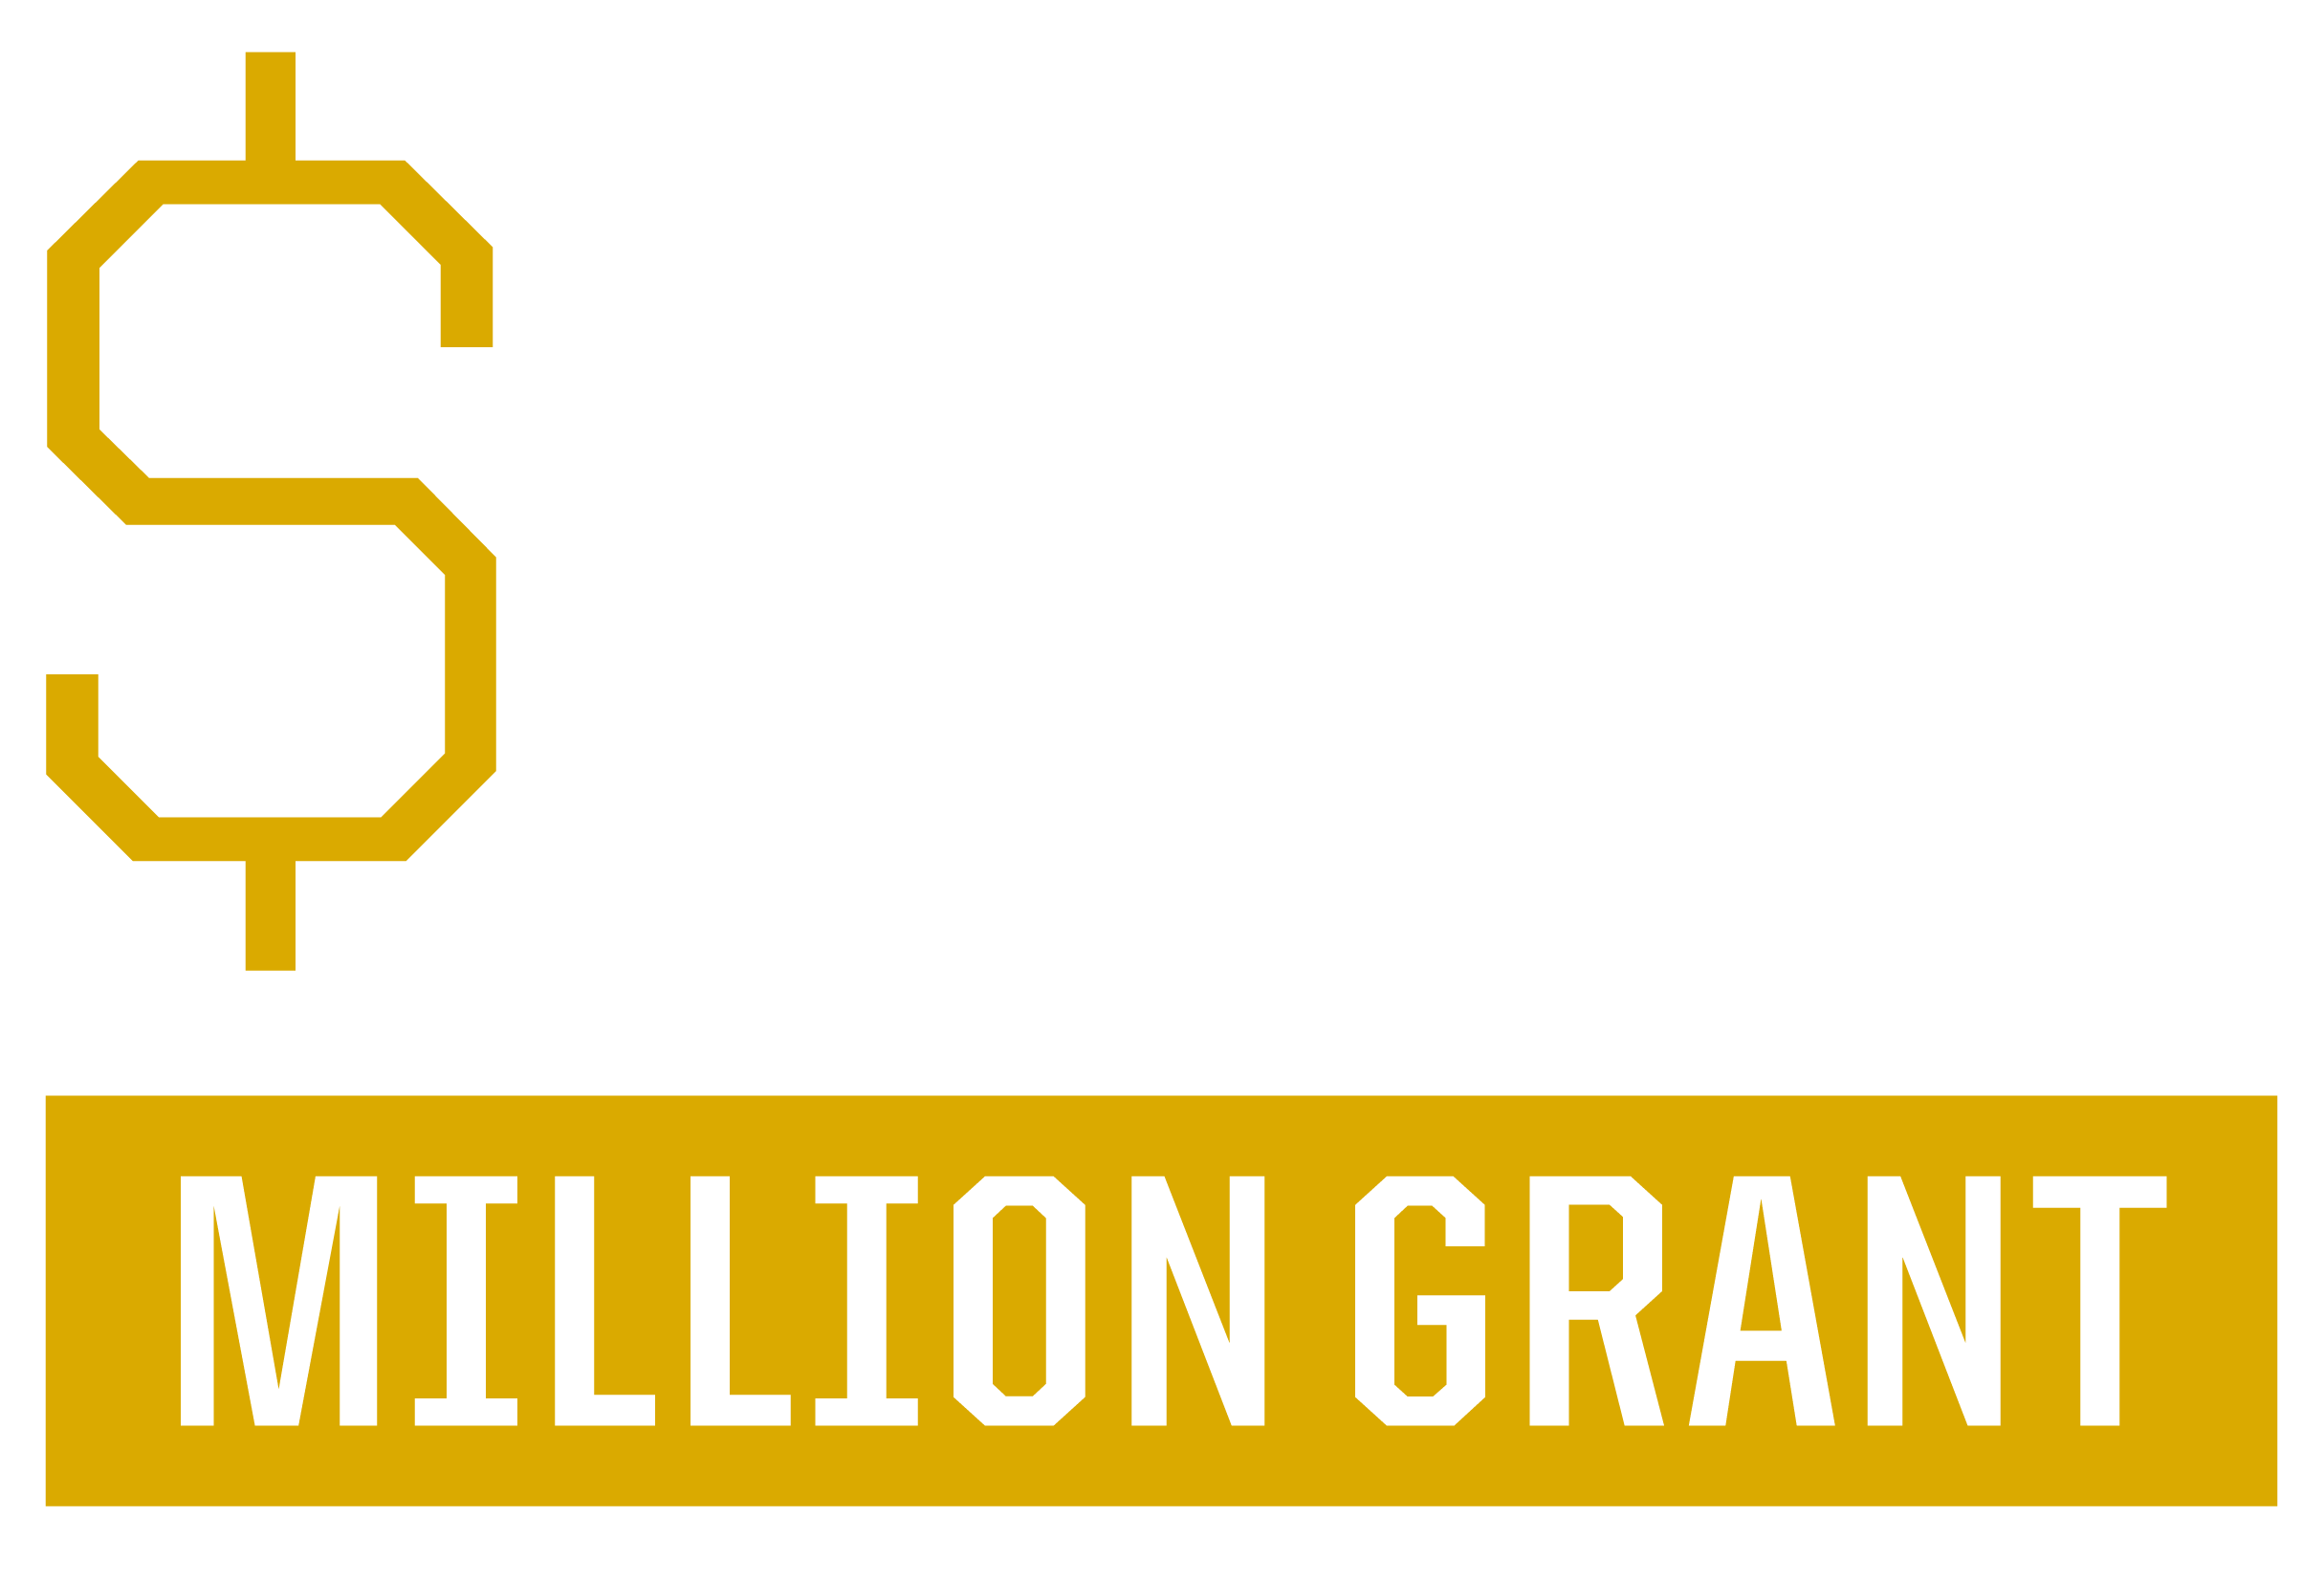 $2.5 million grant